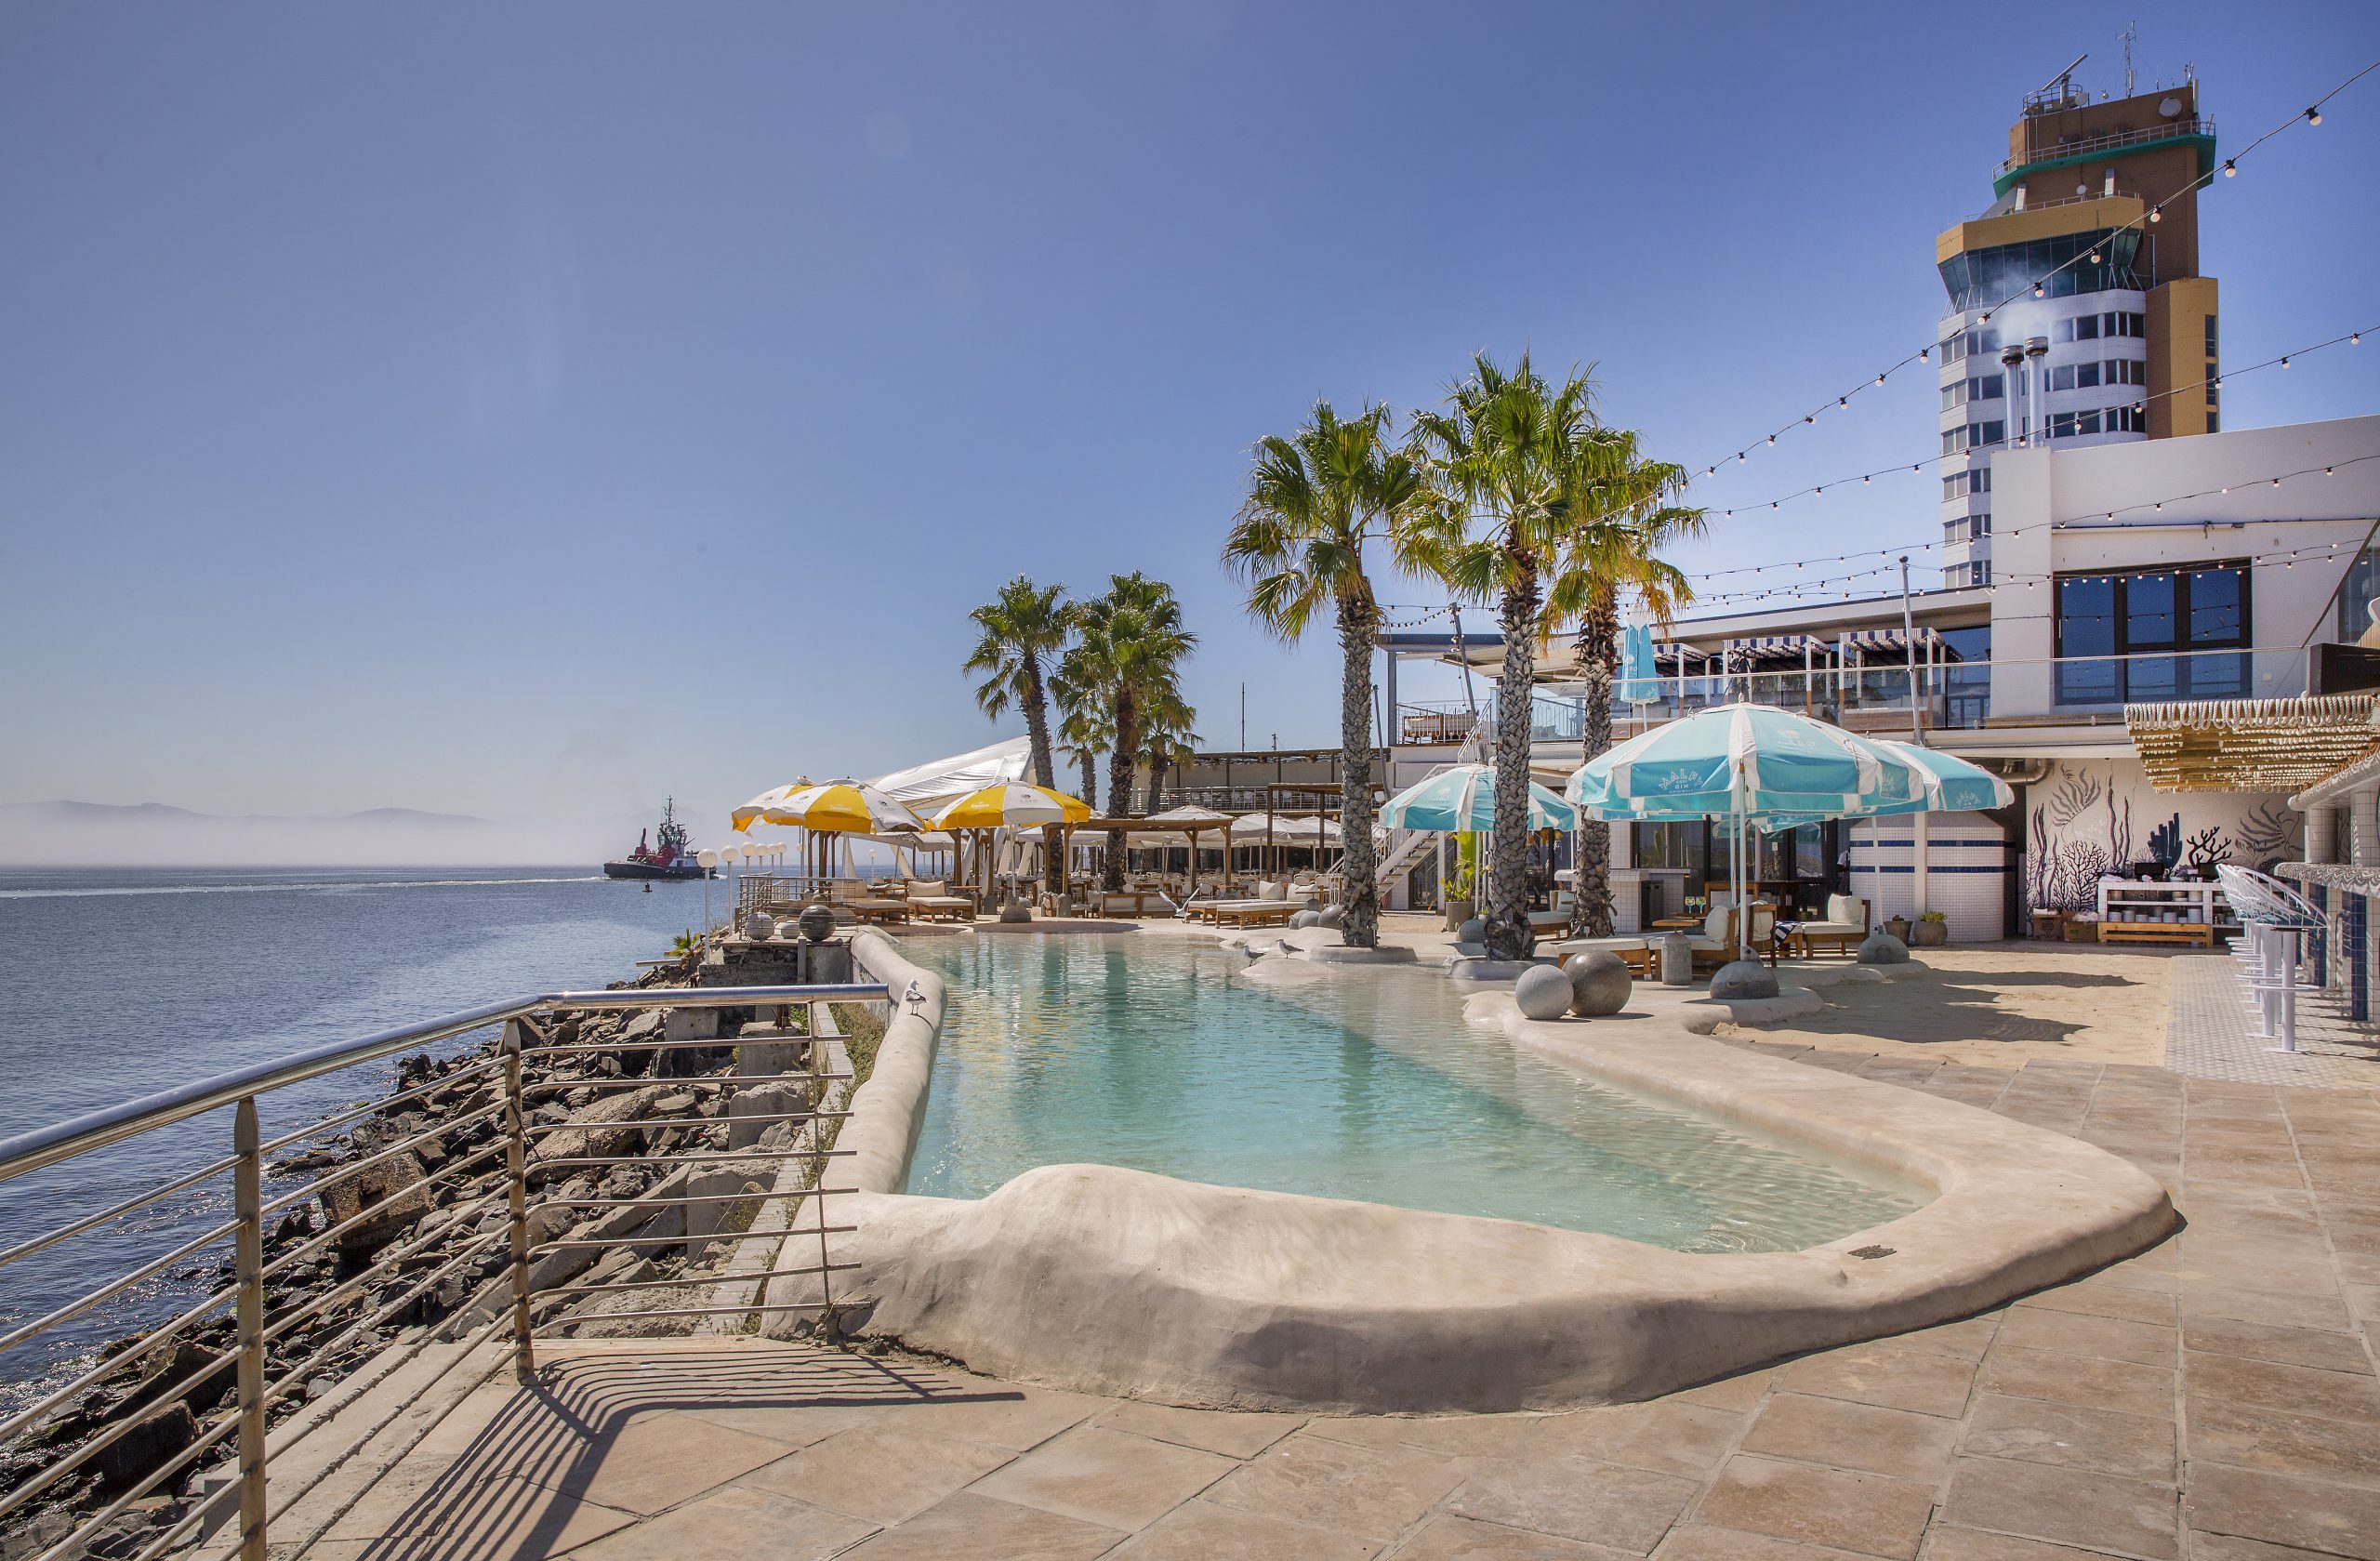 Cabo Beach Club - Luxury Restaurant Awards